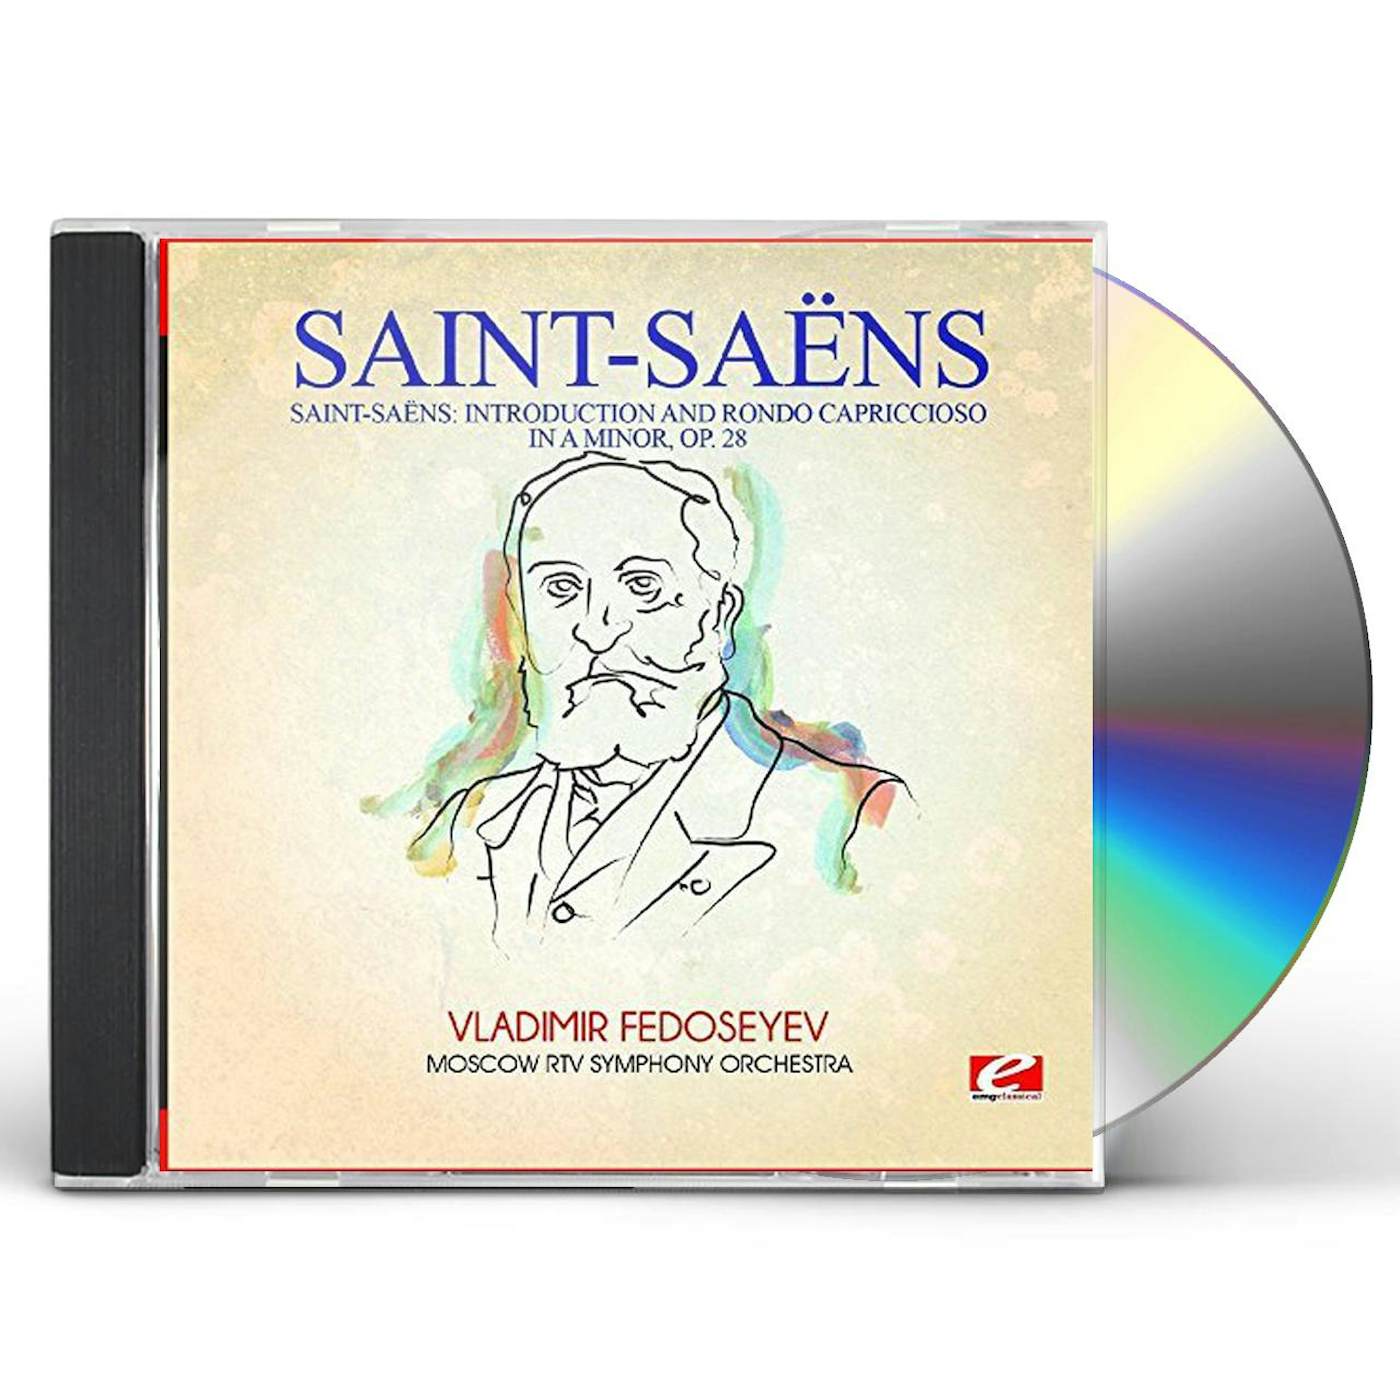 Saint-Saens INTRODUCTION & RONDO CAPRICCIOSO IN A MINOR OP. 28 CD